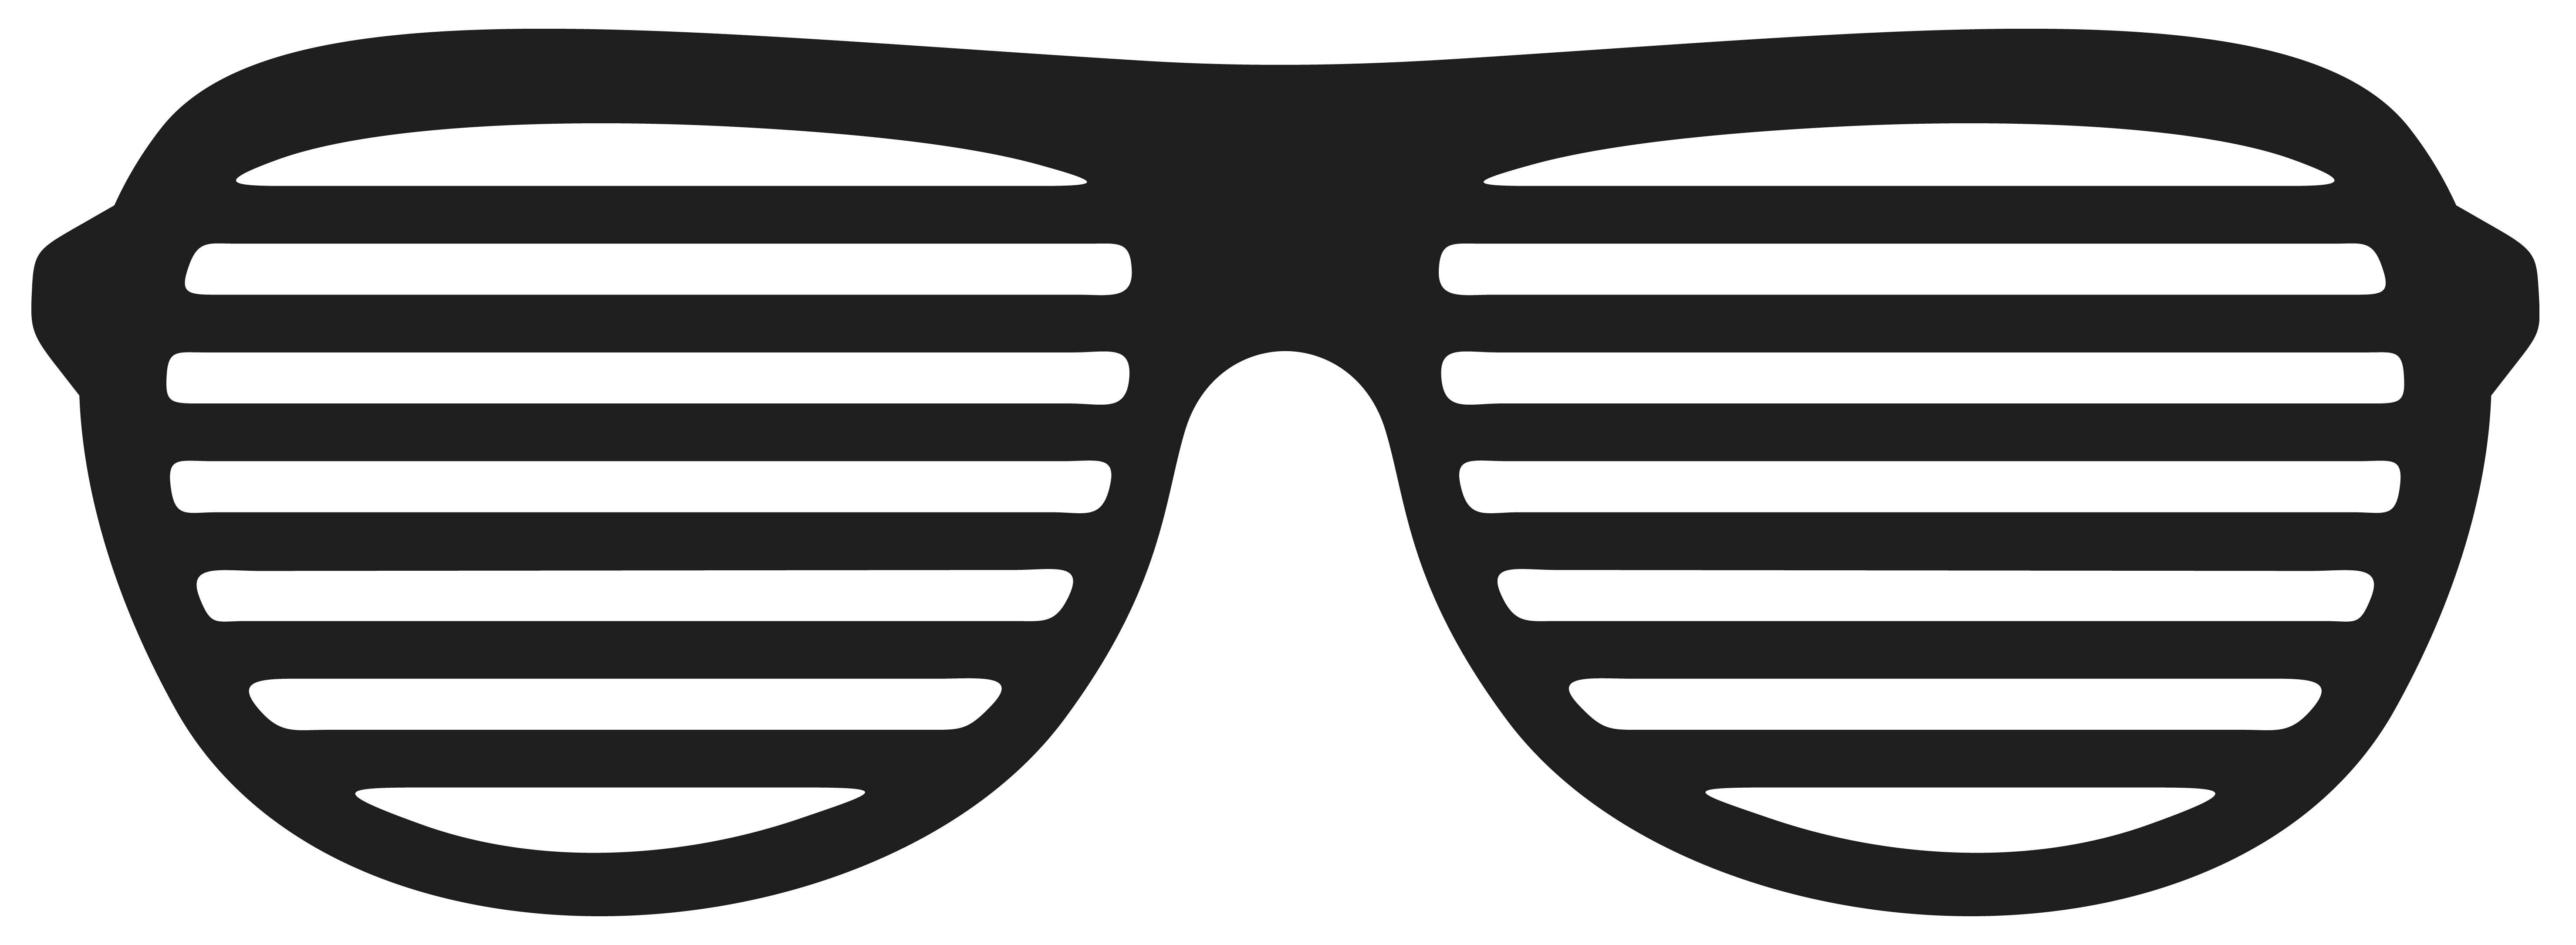 Clipart Sunglasses Black And White Clipart Sunglasses Black And White